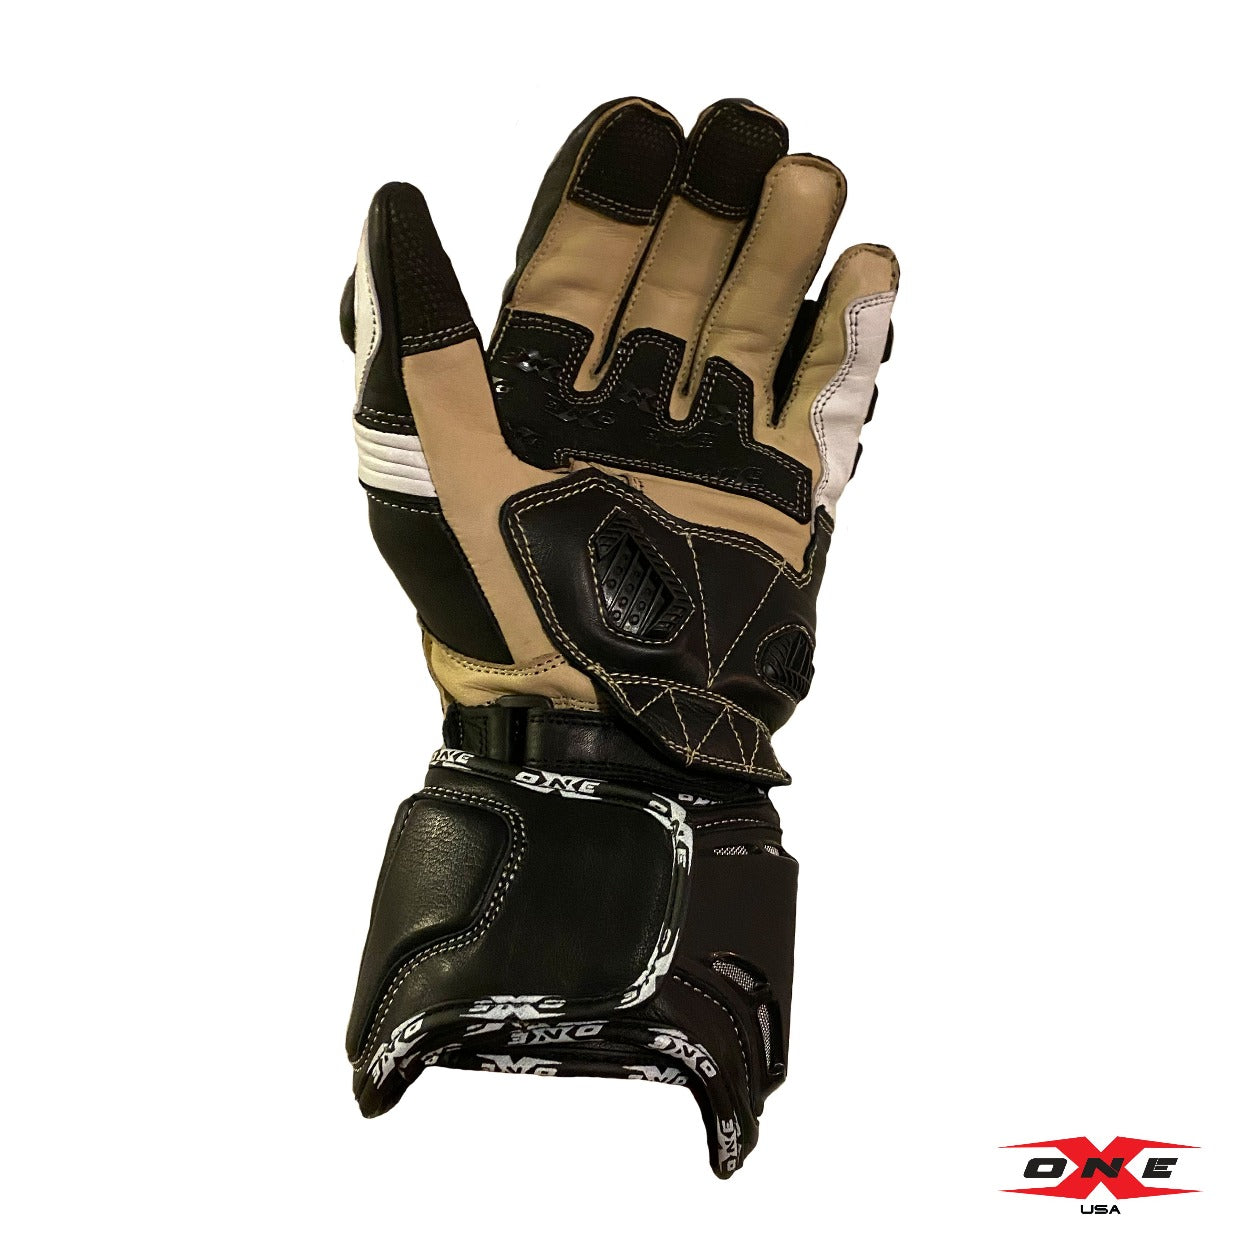 OneX USA Pro Race Gloves - Black / White